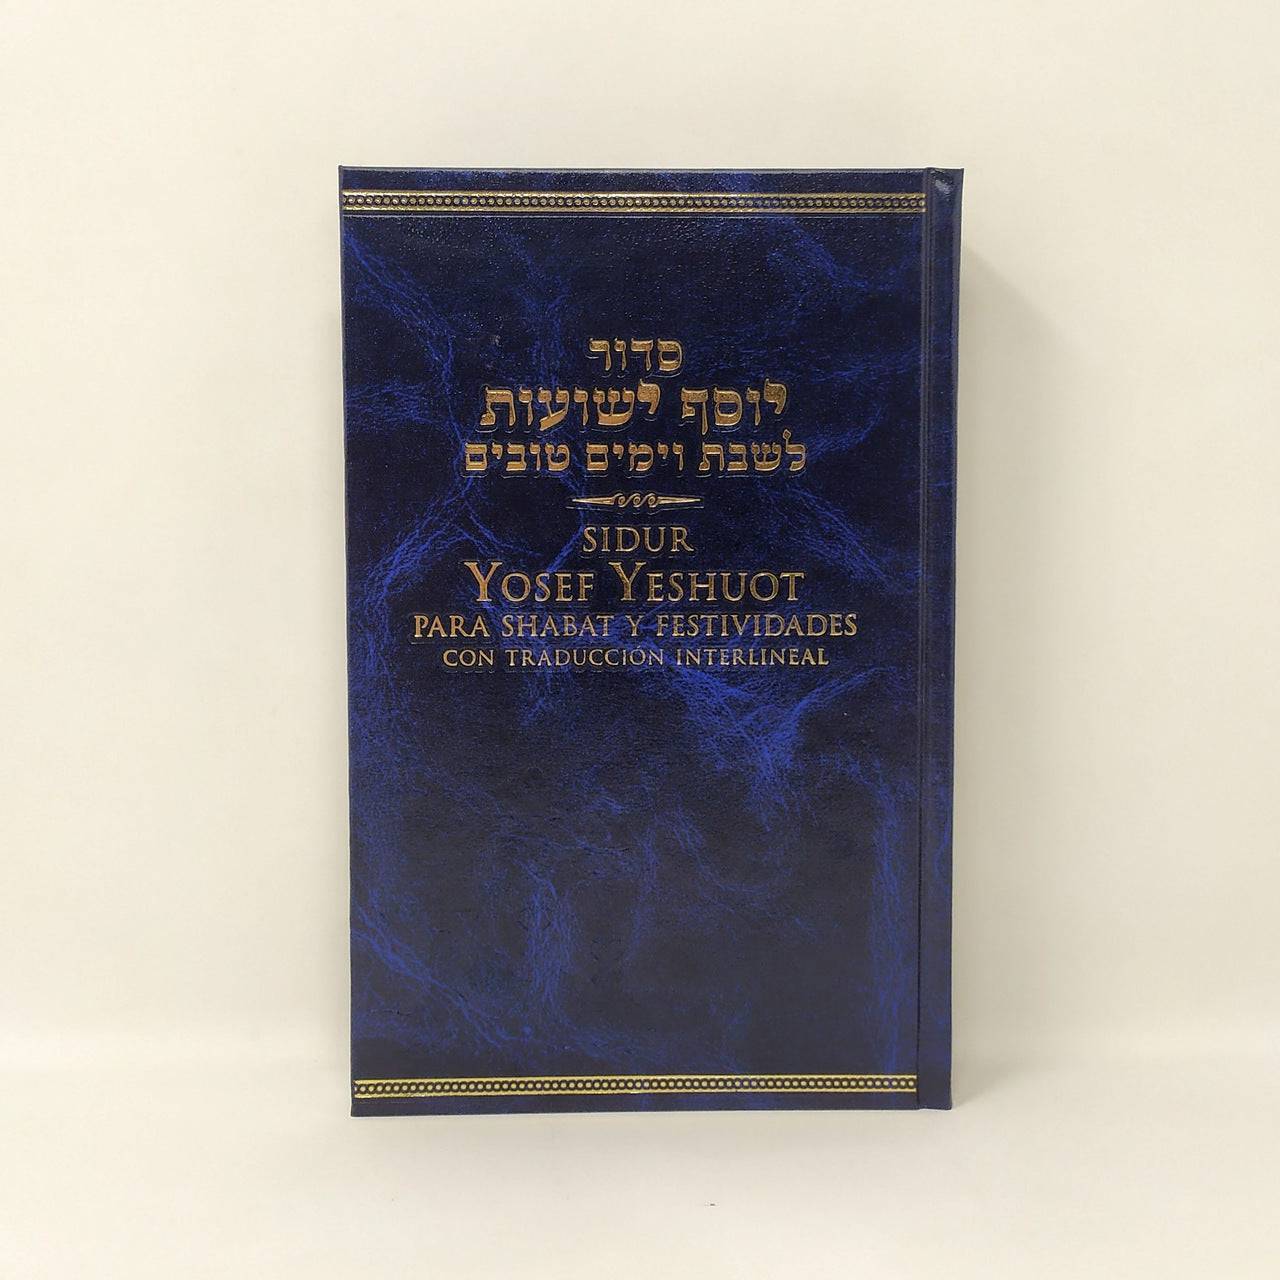 Sidur Yosef Yeshuot Shabat Y Festividades Interlineal - Libreria Jerusalem Centro